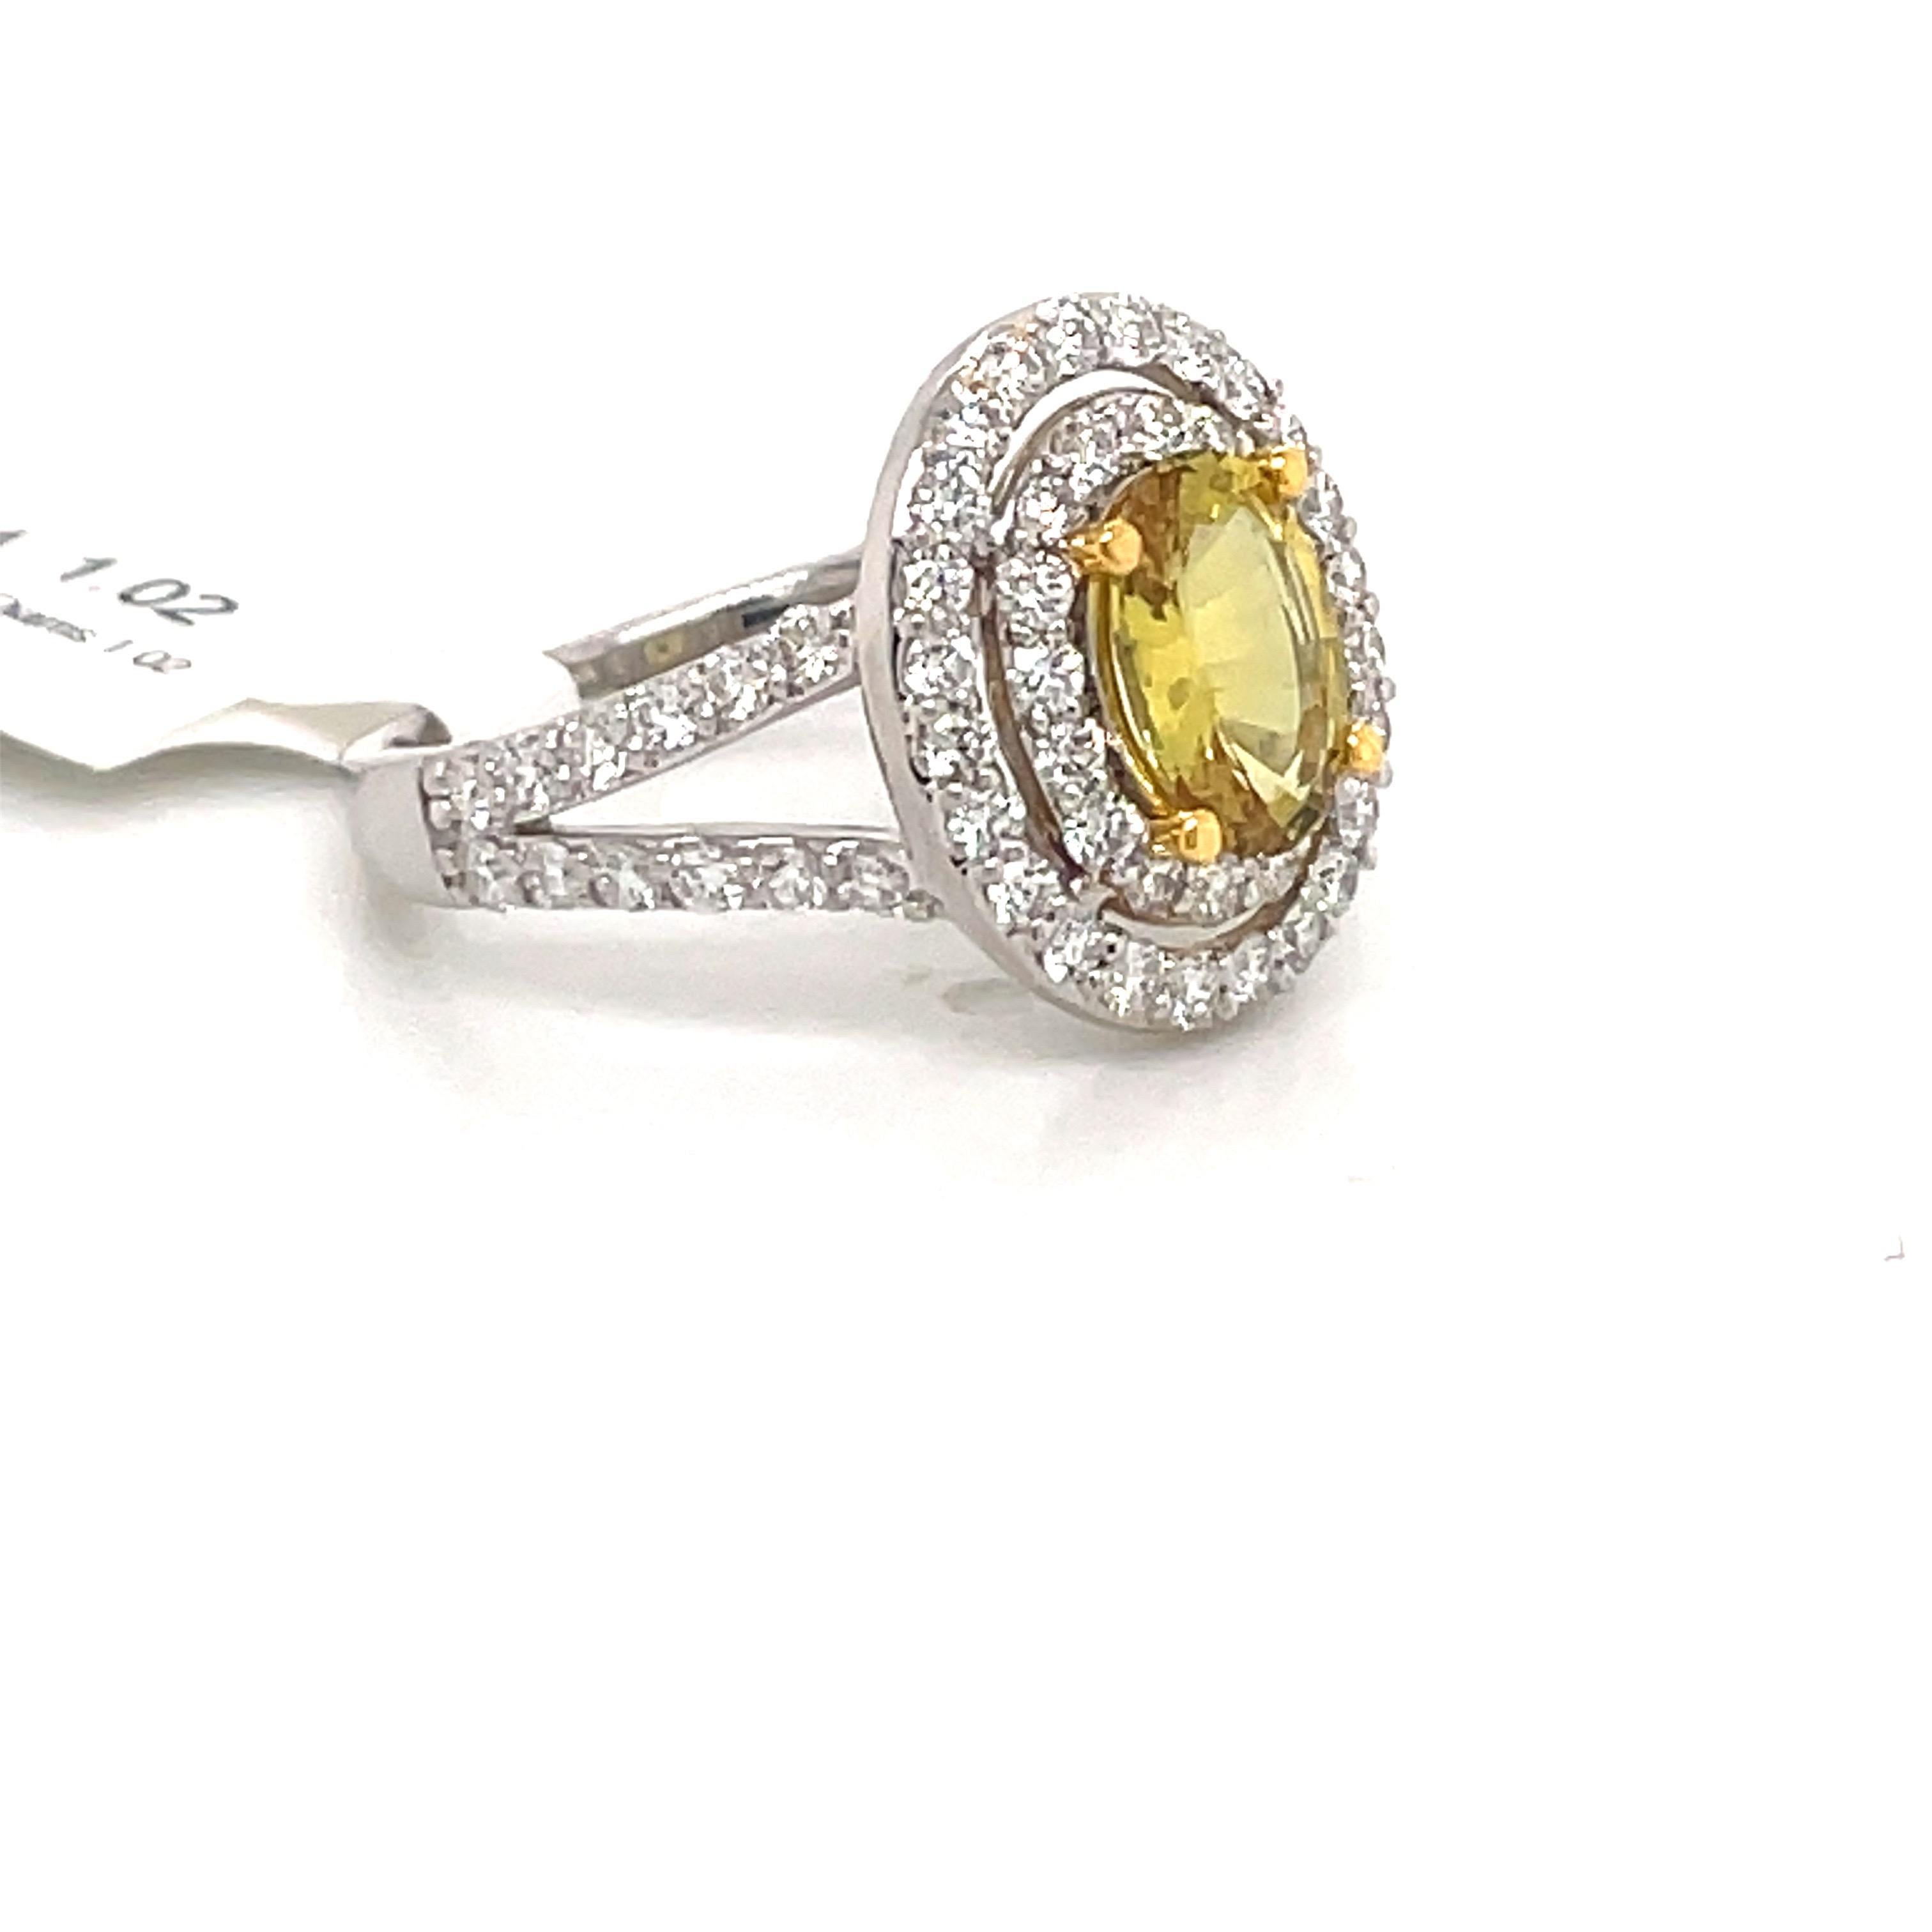 2 carat yellow sapphire ring